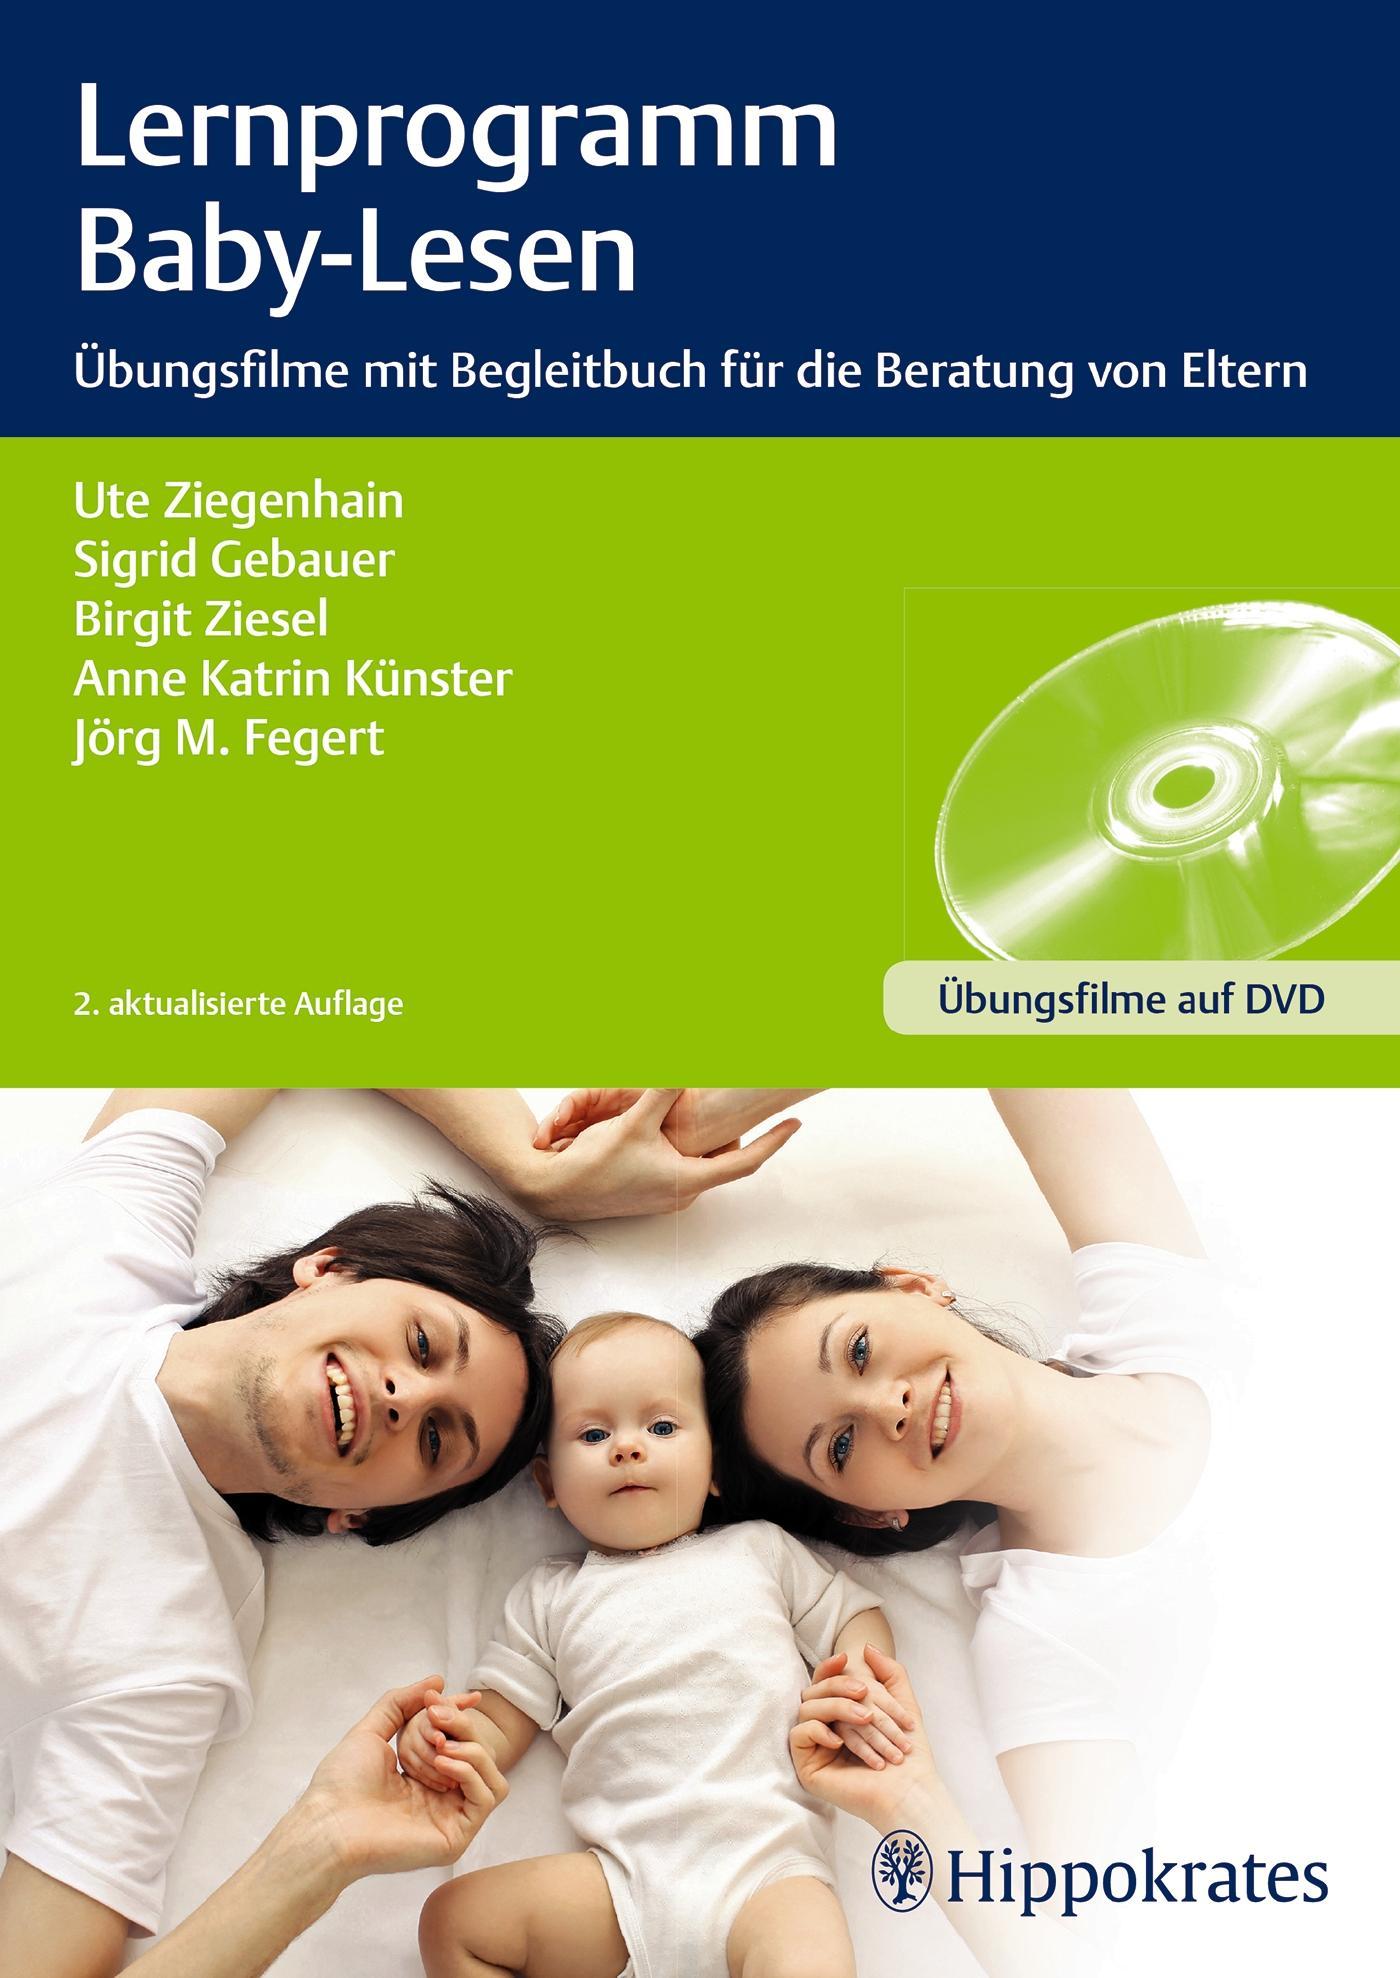 Image of Lernprogramm Baby-Lesen, 1 DVD + Begleitheft